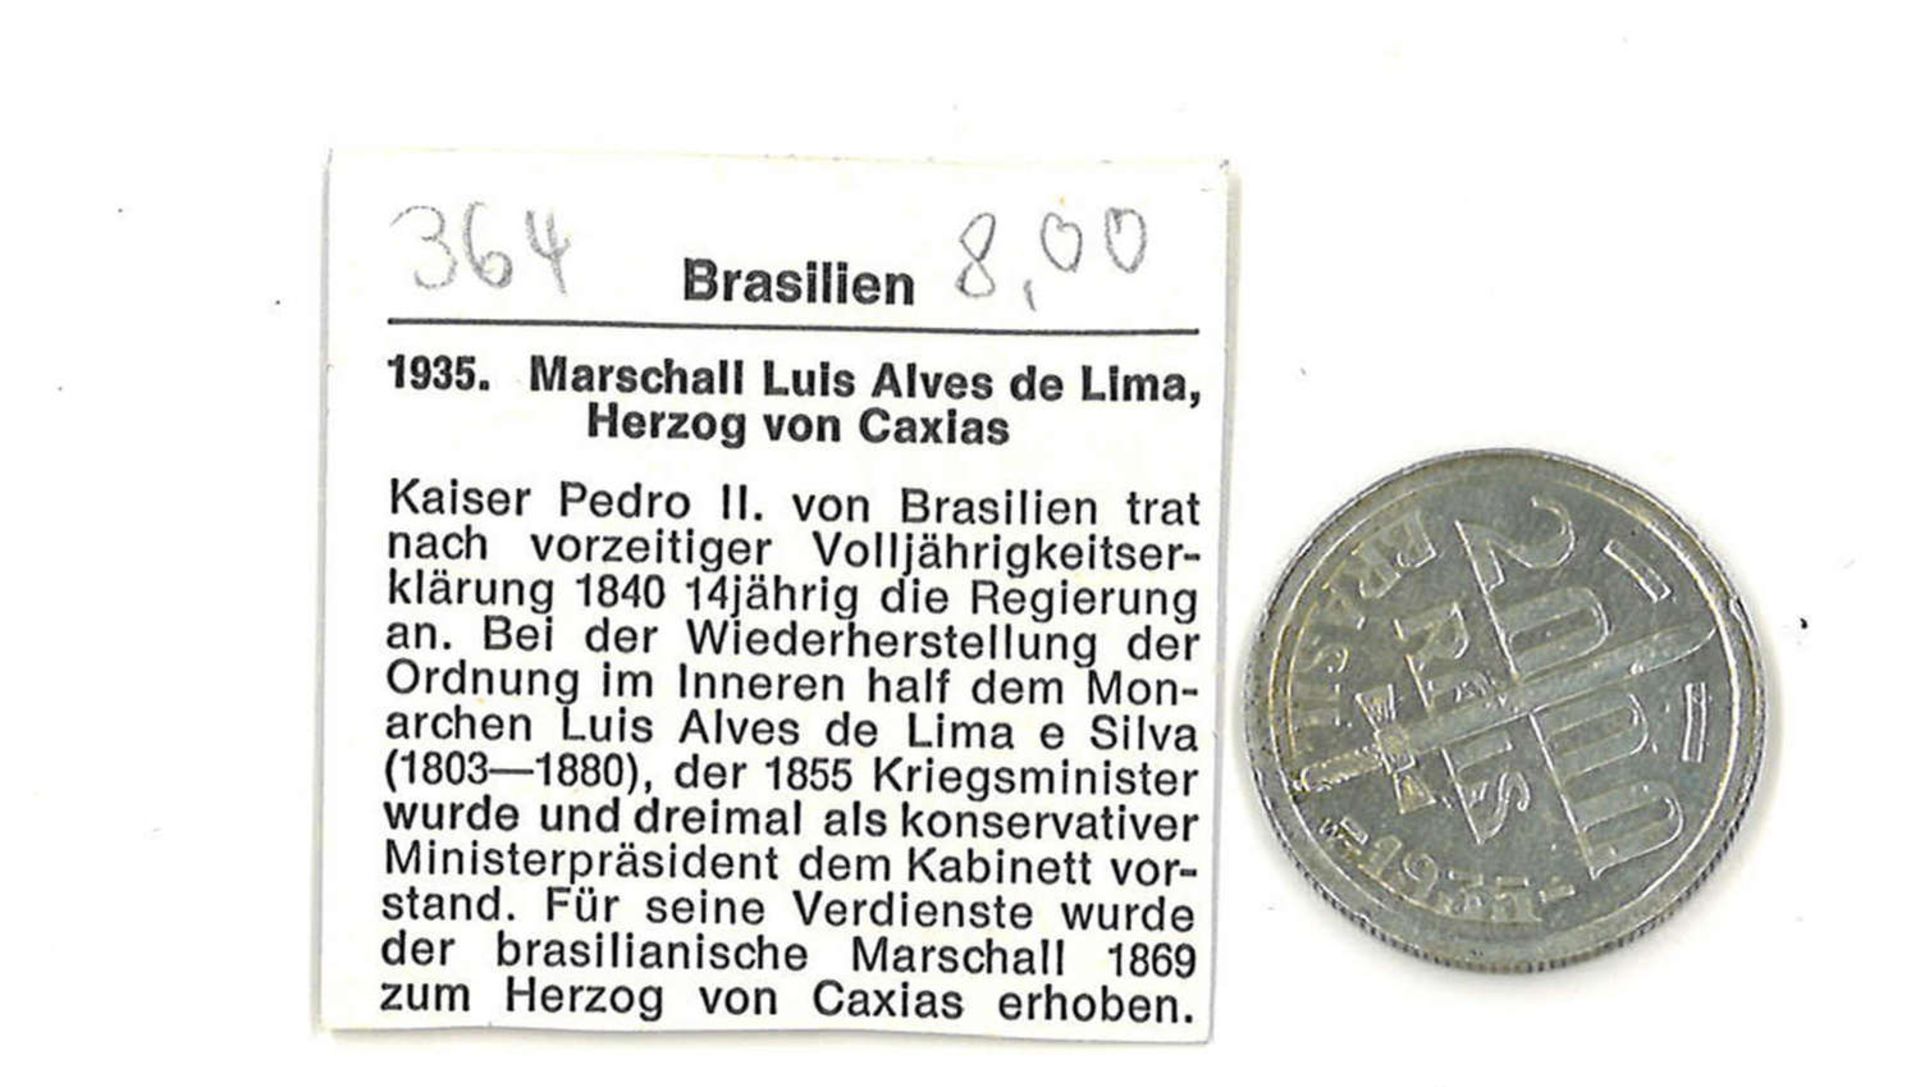 Silbermünze Brasilien 1935. 2000 ReisSilver Coin Brazil 1935. 2000 Rice - Image 2 of 2